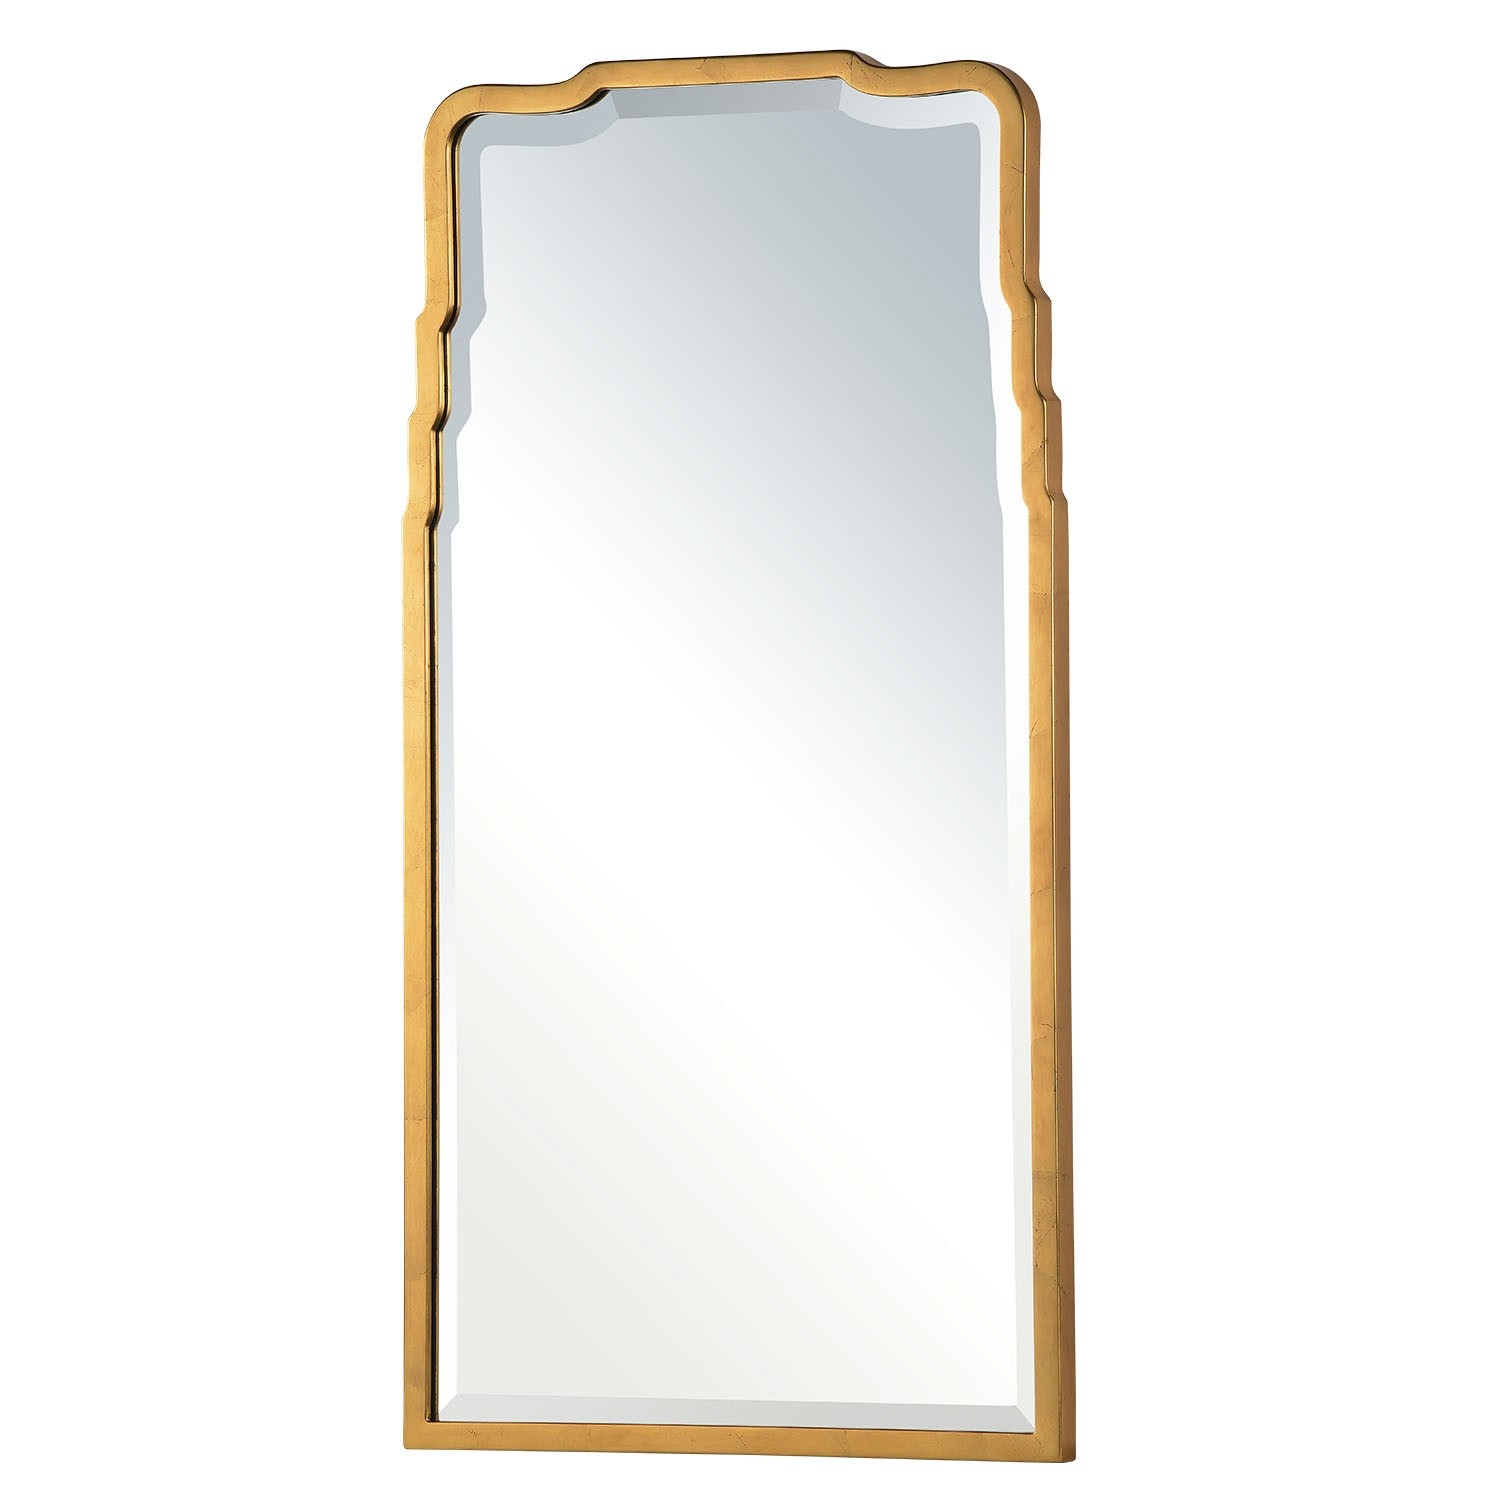 20336-DGL Mirror - Mirror Home - MH